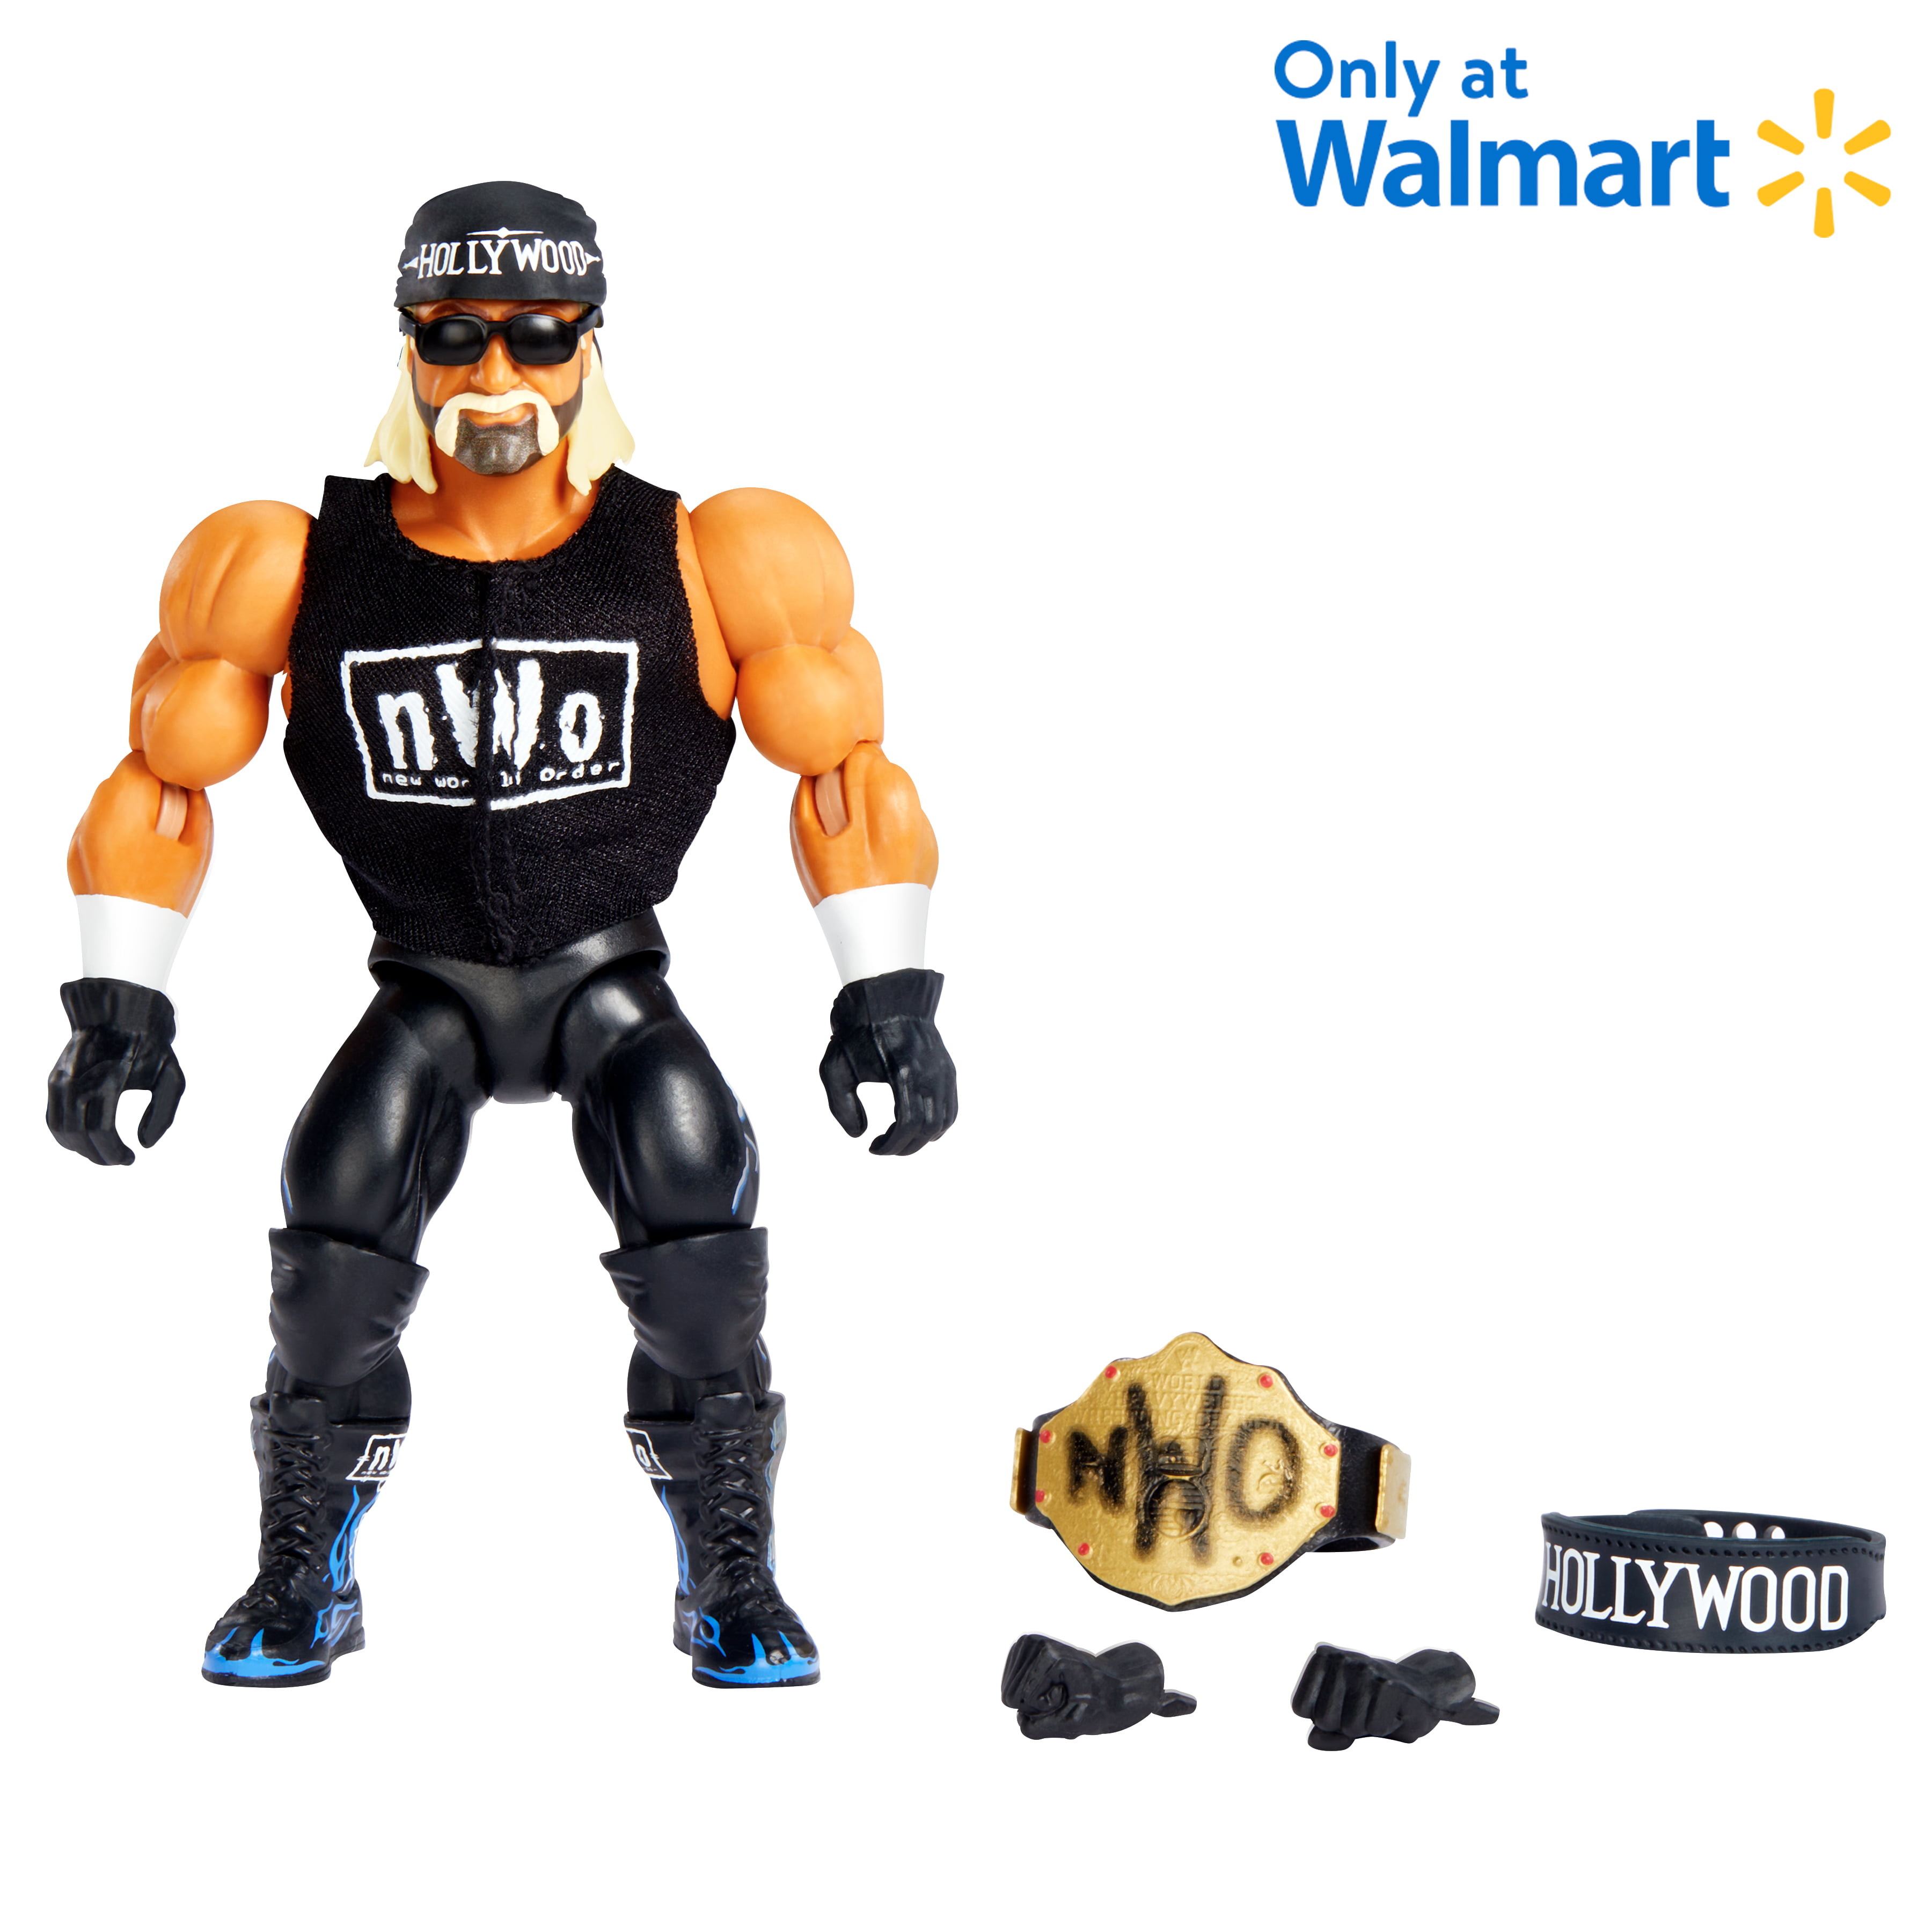 Hulk Hogan STING Rock WWF WWE YOUR CHOICE WCW Wrestling Action Figures 